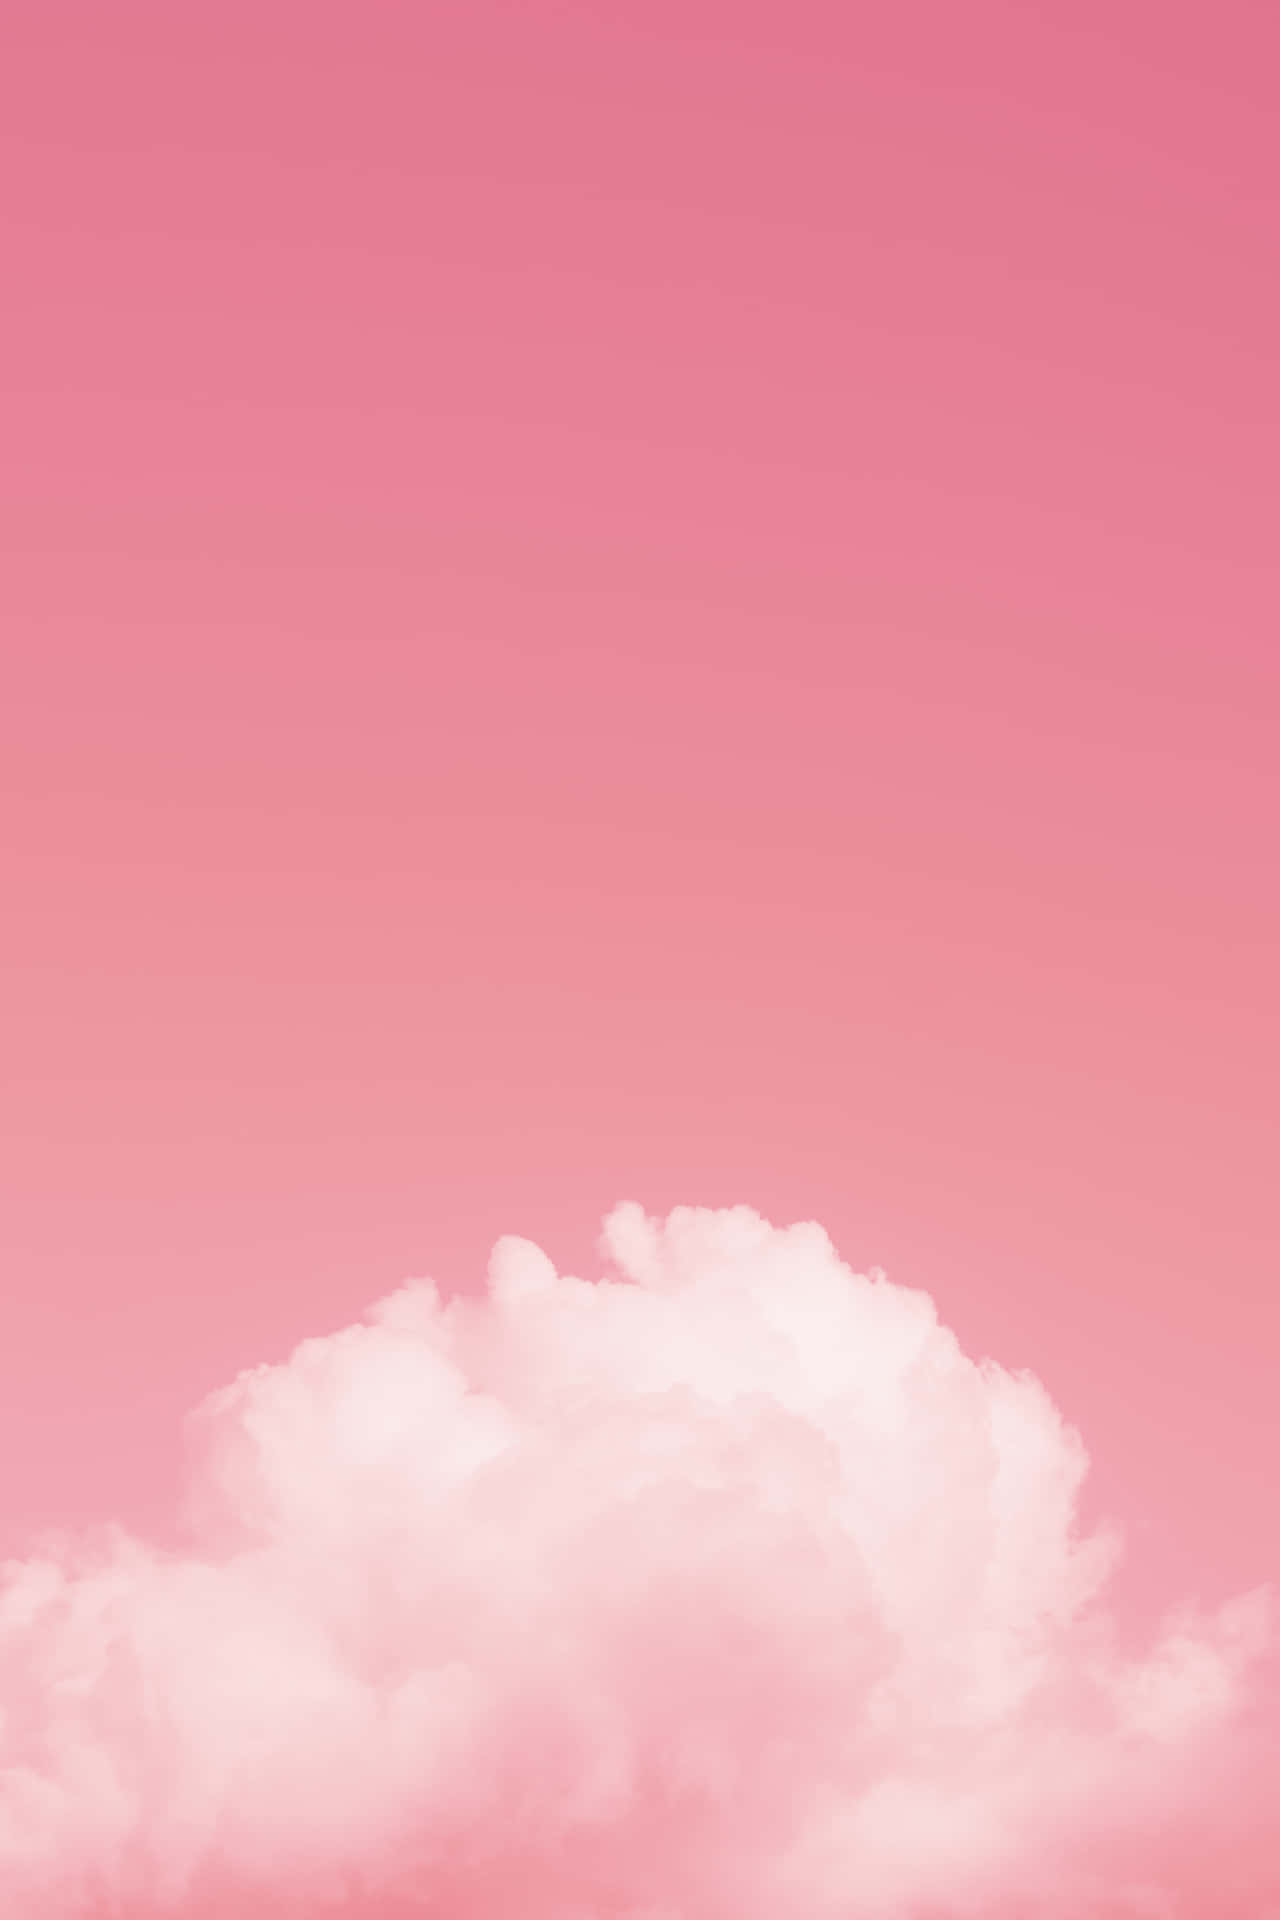 Simple Pink Cloud Wallpaper